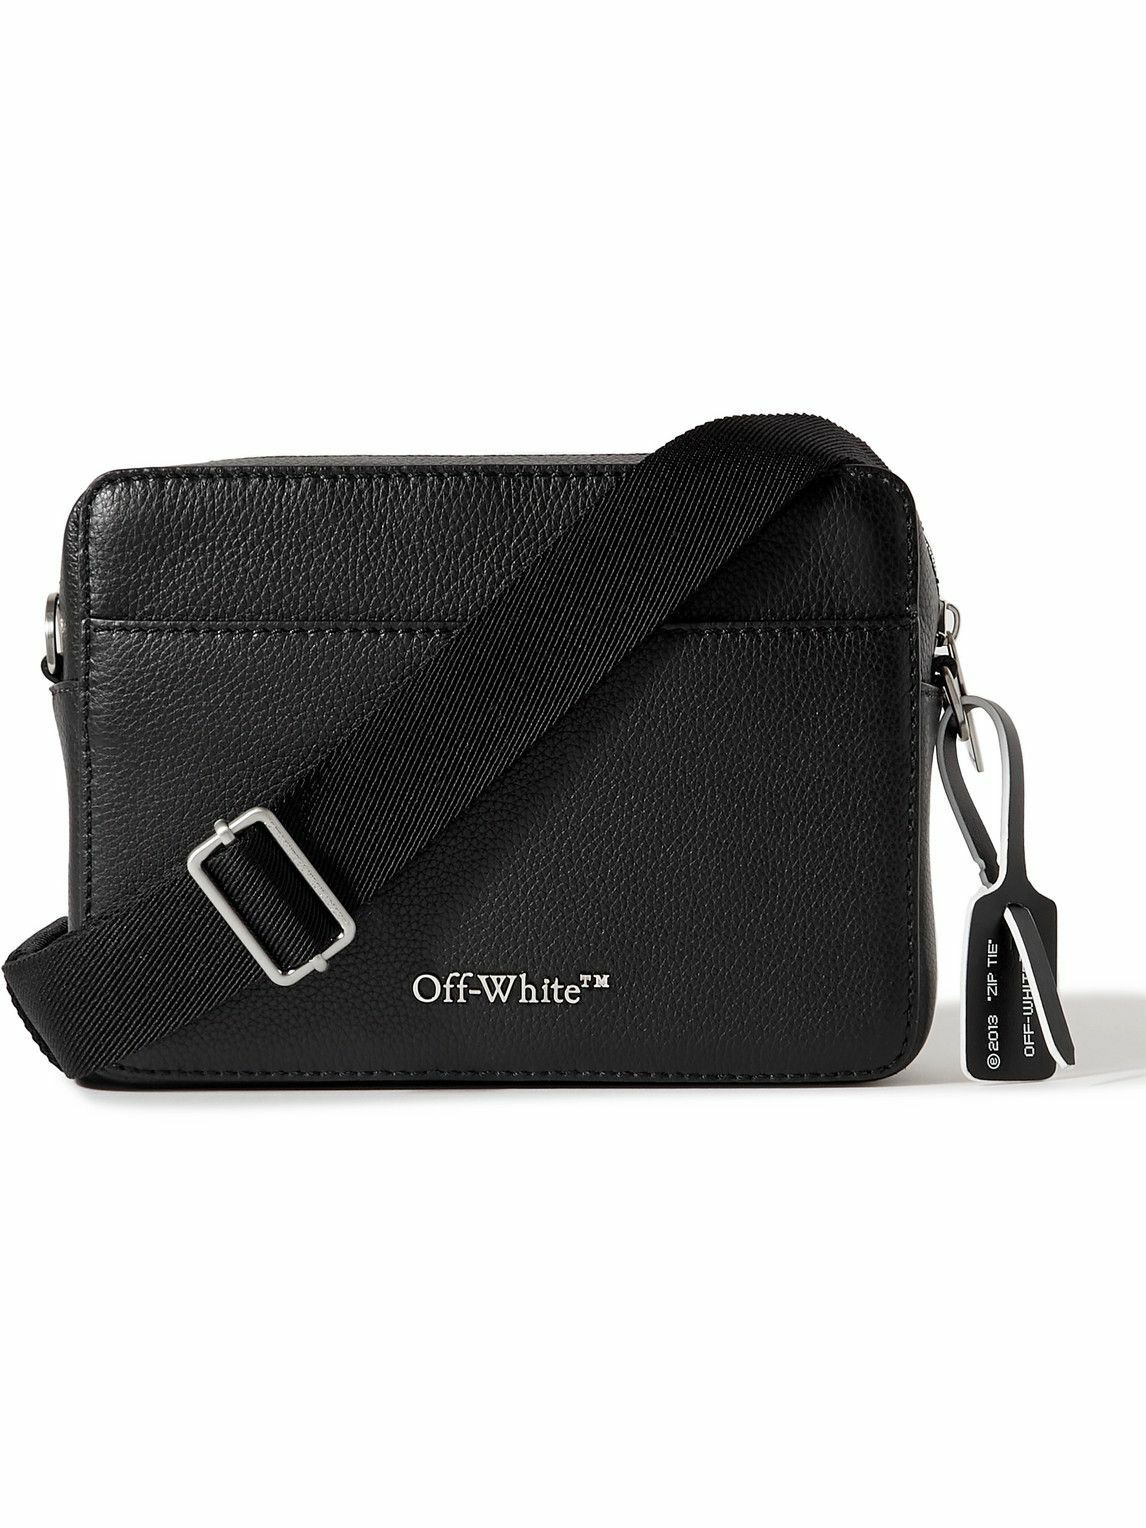 Off-White - Arrow Leather-Trimmed Nylon Messenger Bag Off-White